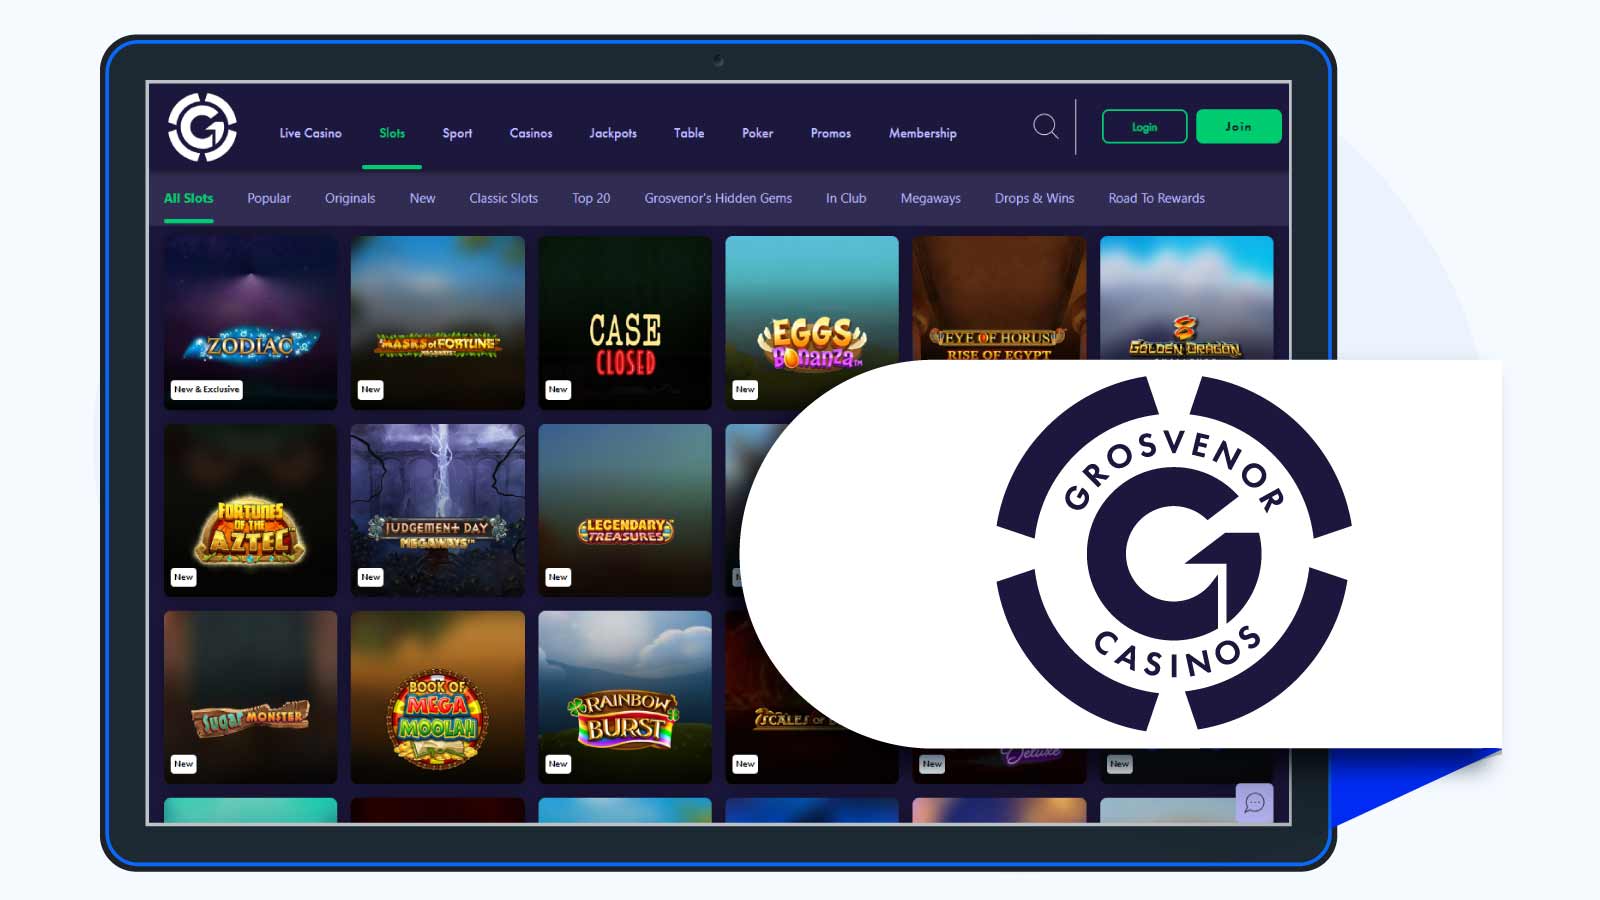 Grosvenor Casino – Deposit £20 play with £50